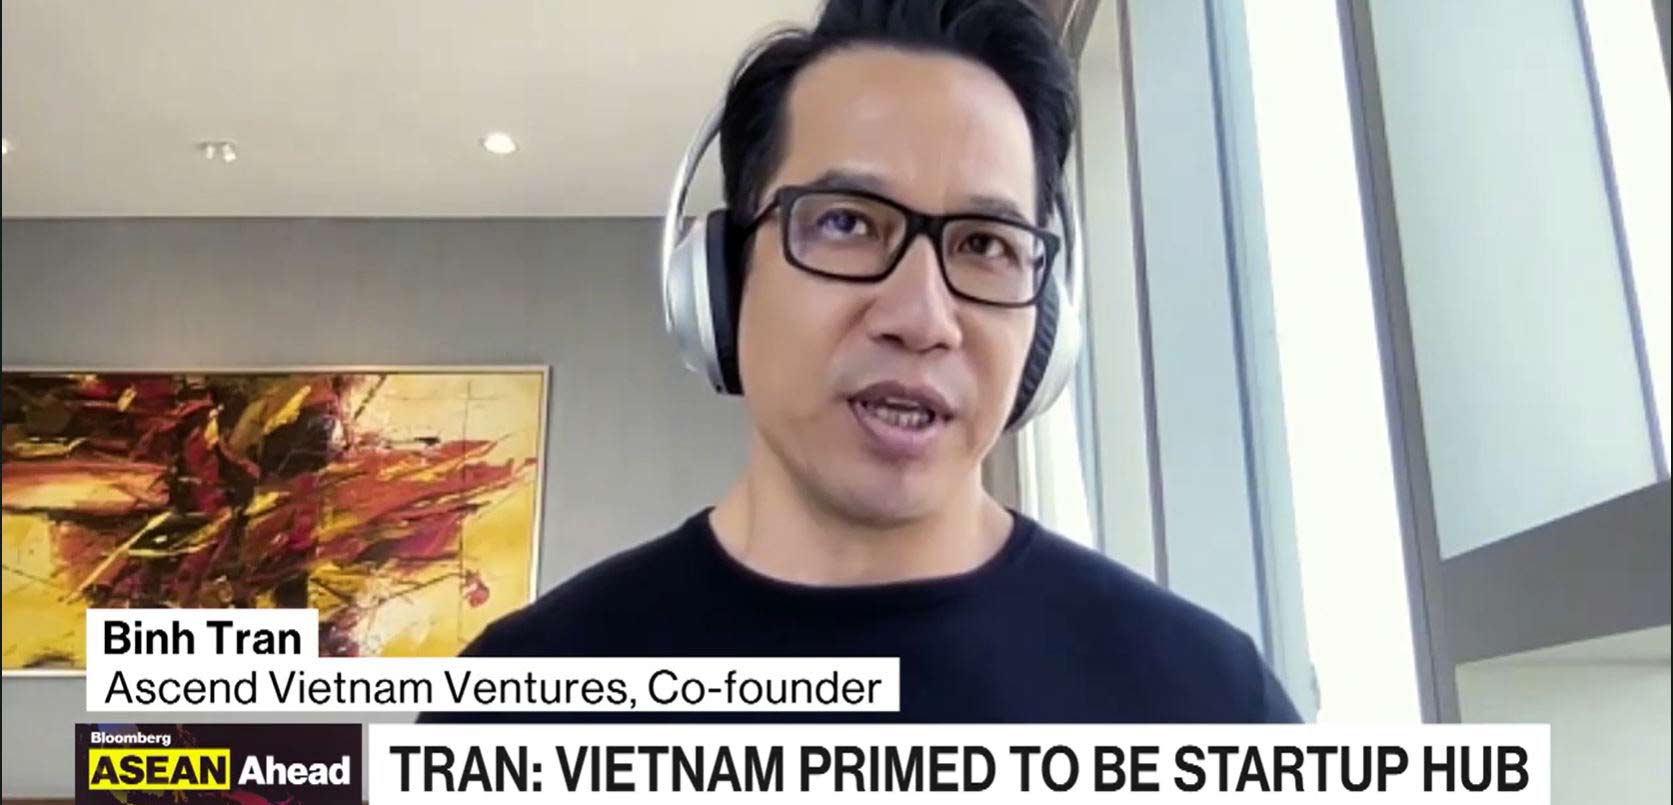  Ascend Vietnam Ventures